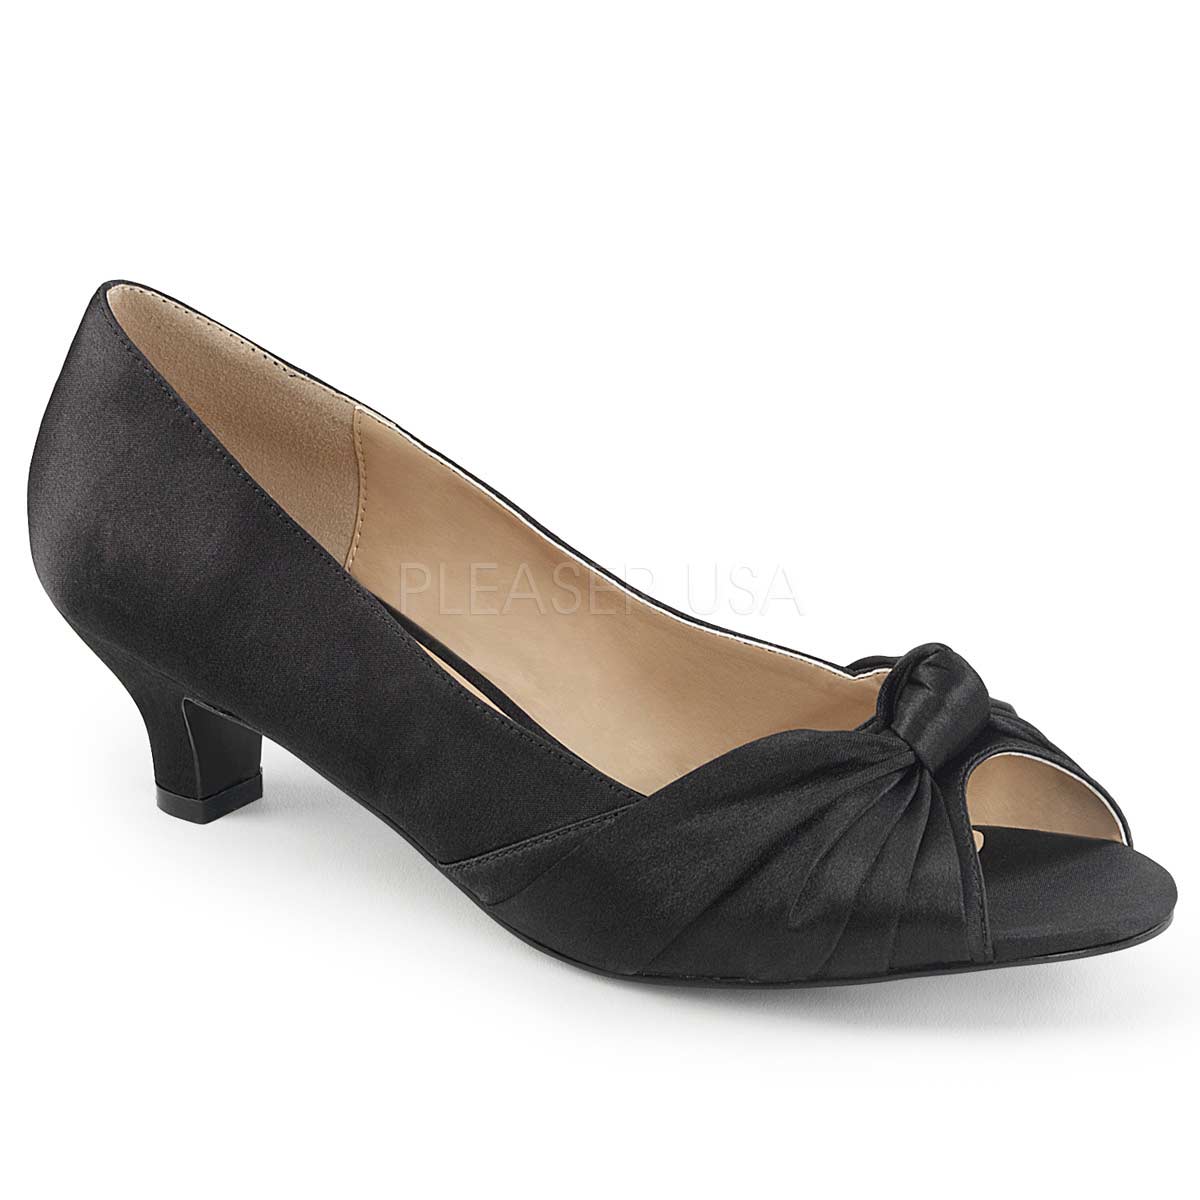 Pleaser Fab-422 - Black Satin in Sexy Heels & Platforms - $43.99